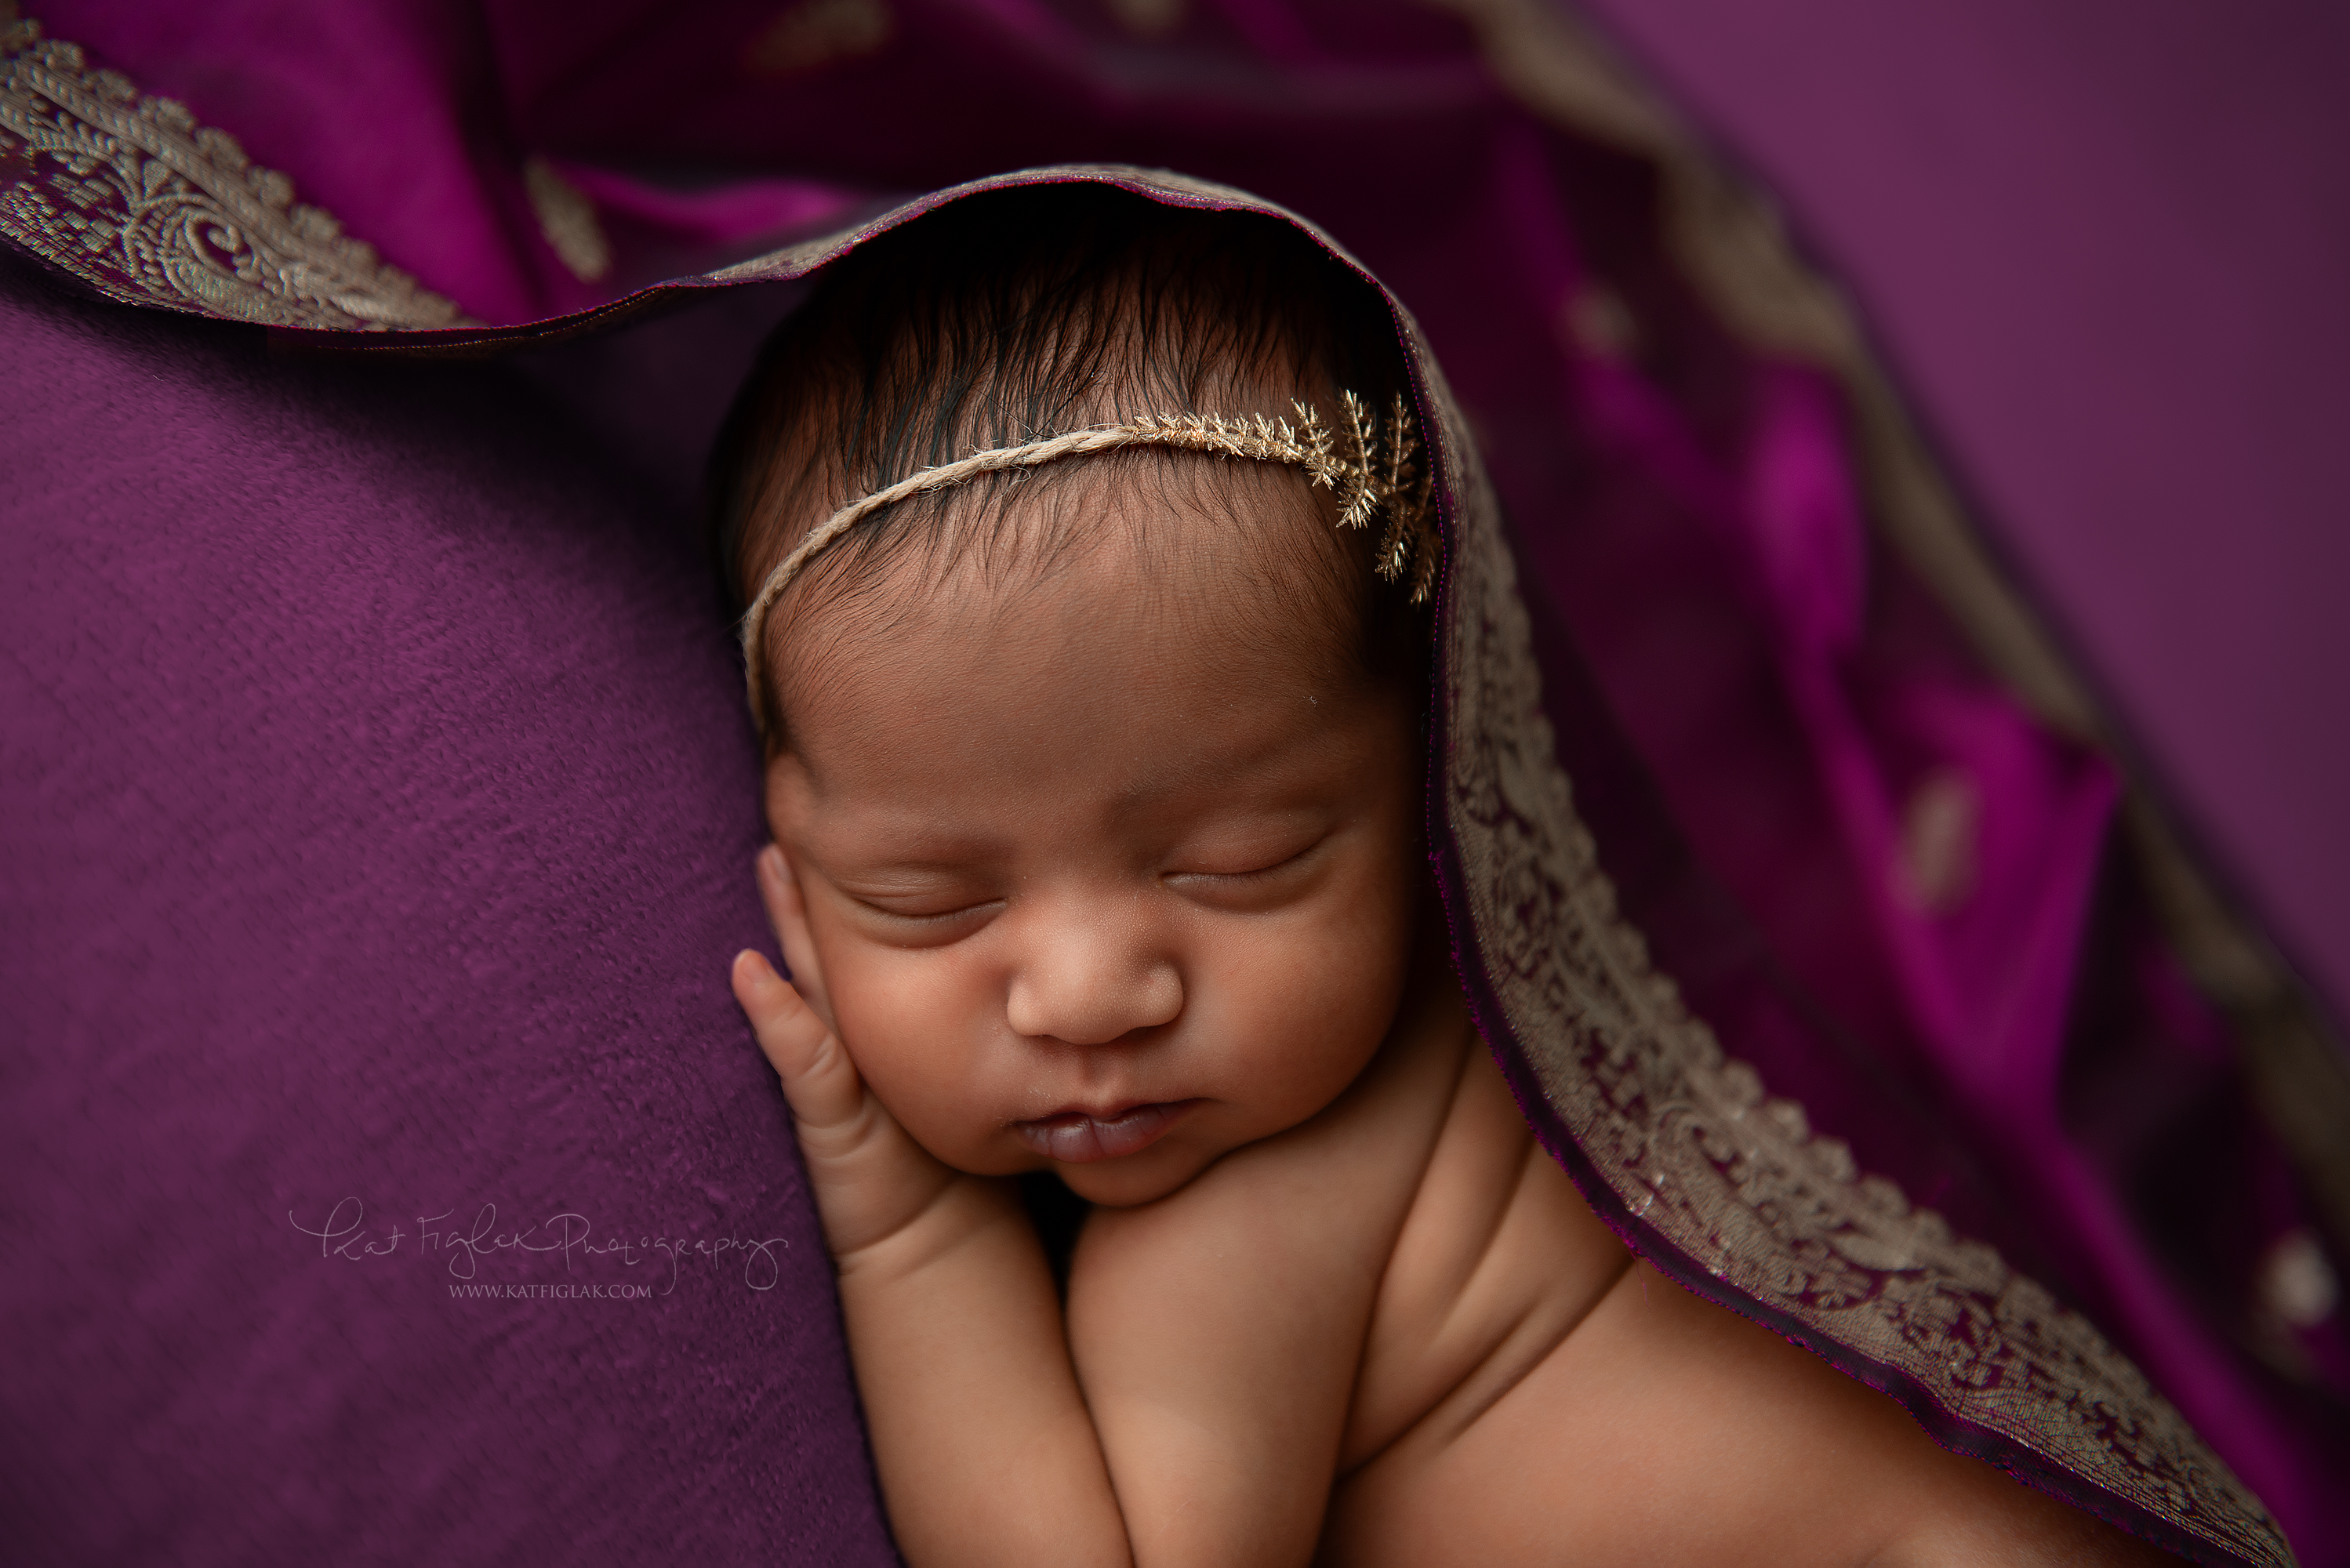 newborn baby girl sleeping on purple blanket covered in silk